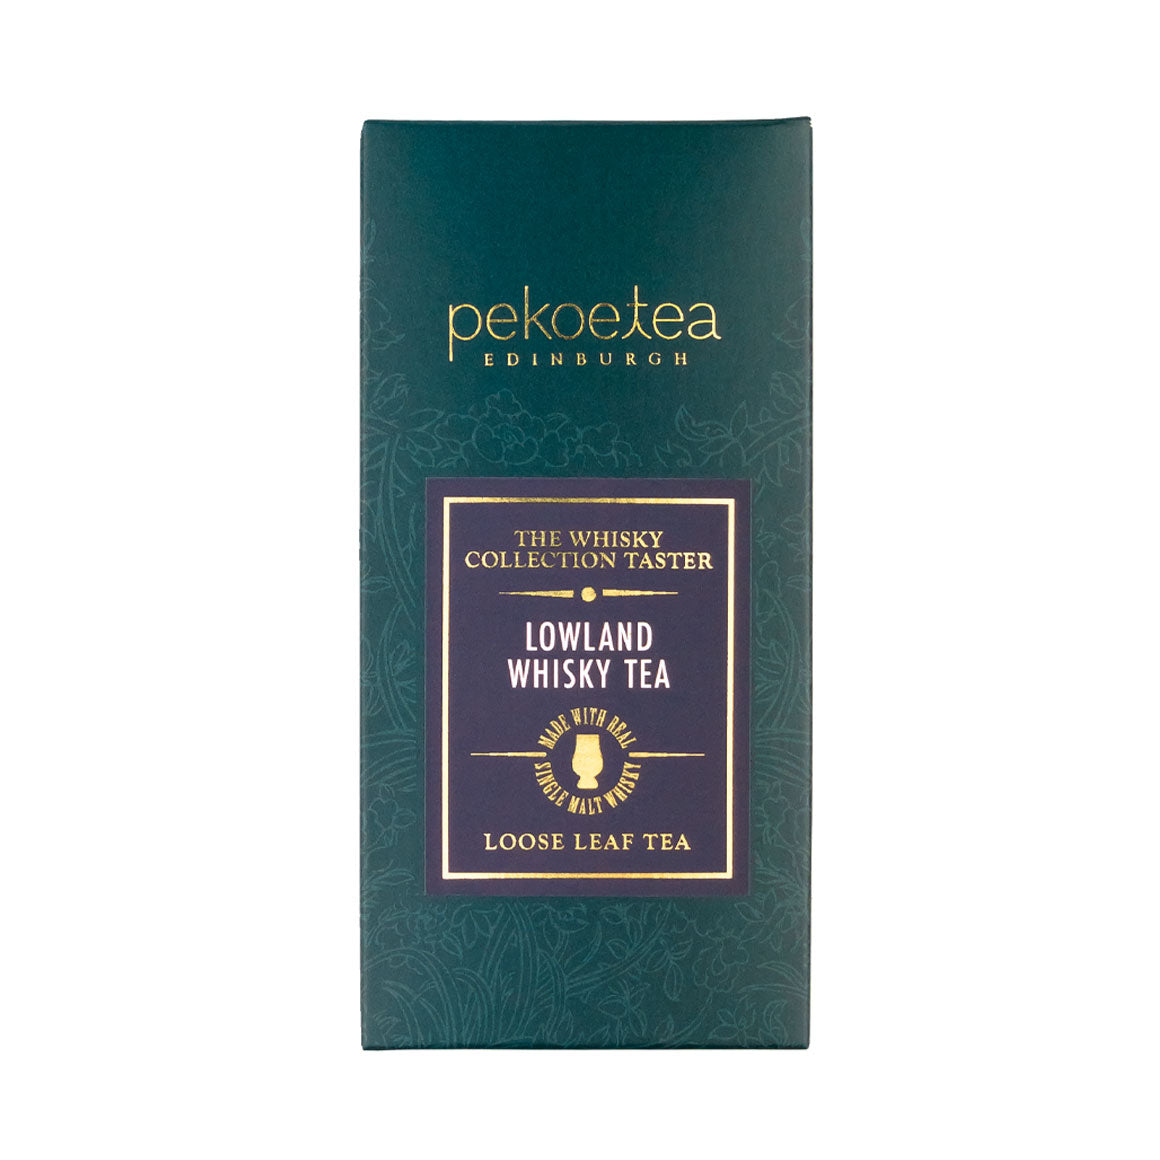 PekoeTea Edinburgh Whisky Tea Collection Lowland Blend Taster Box